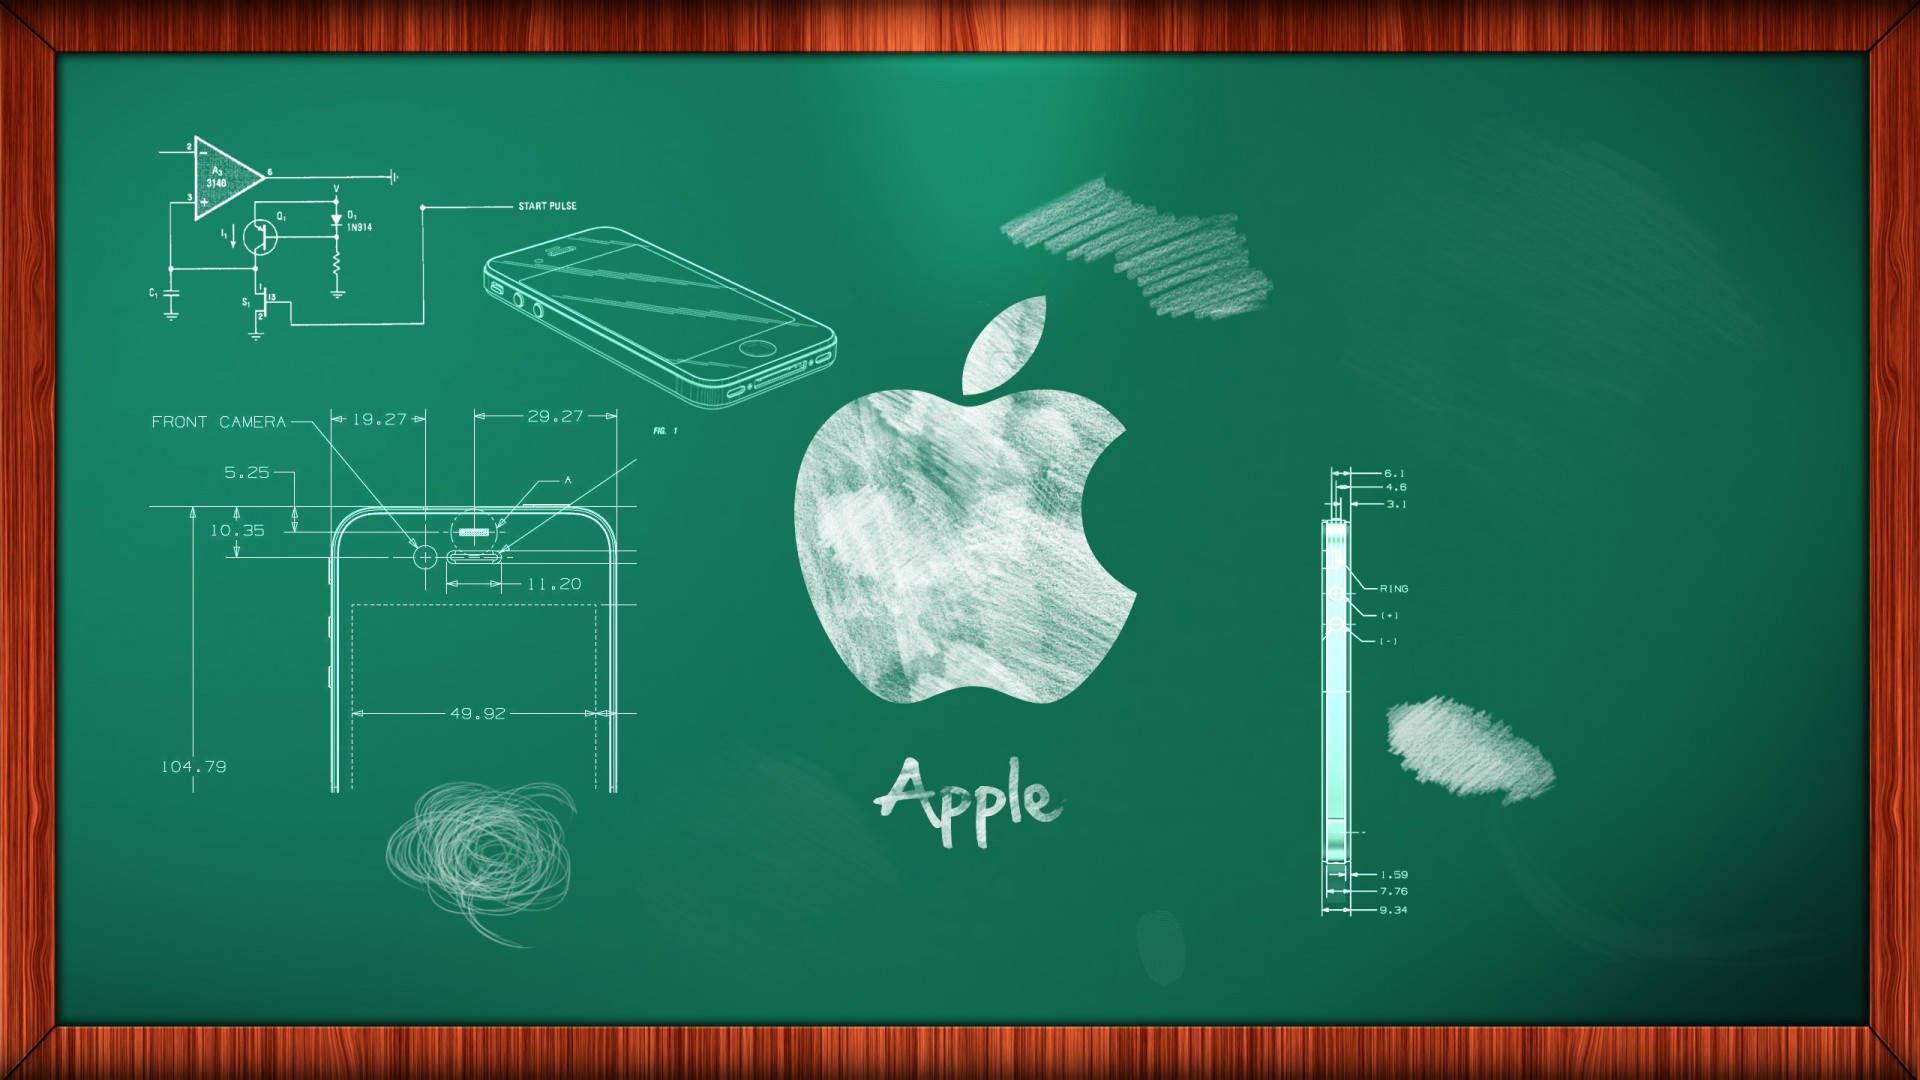 Krittavlamed Äpple-logotypen. Wallpaper